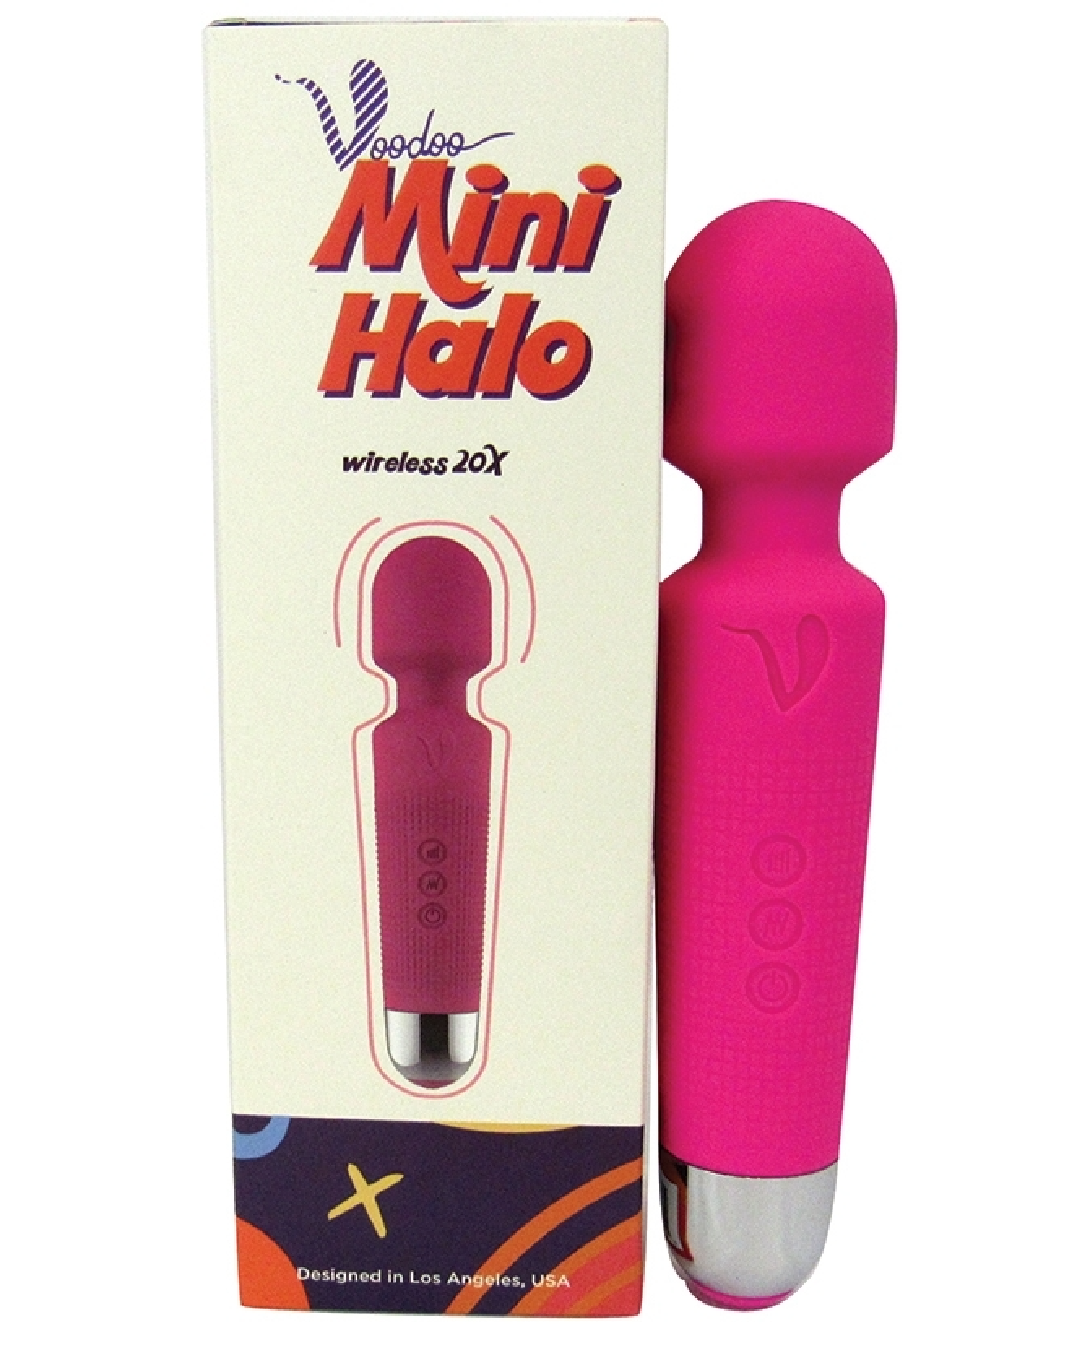 Mini Halo Extra Powerful Wand Vibrator - Pink with its box